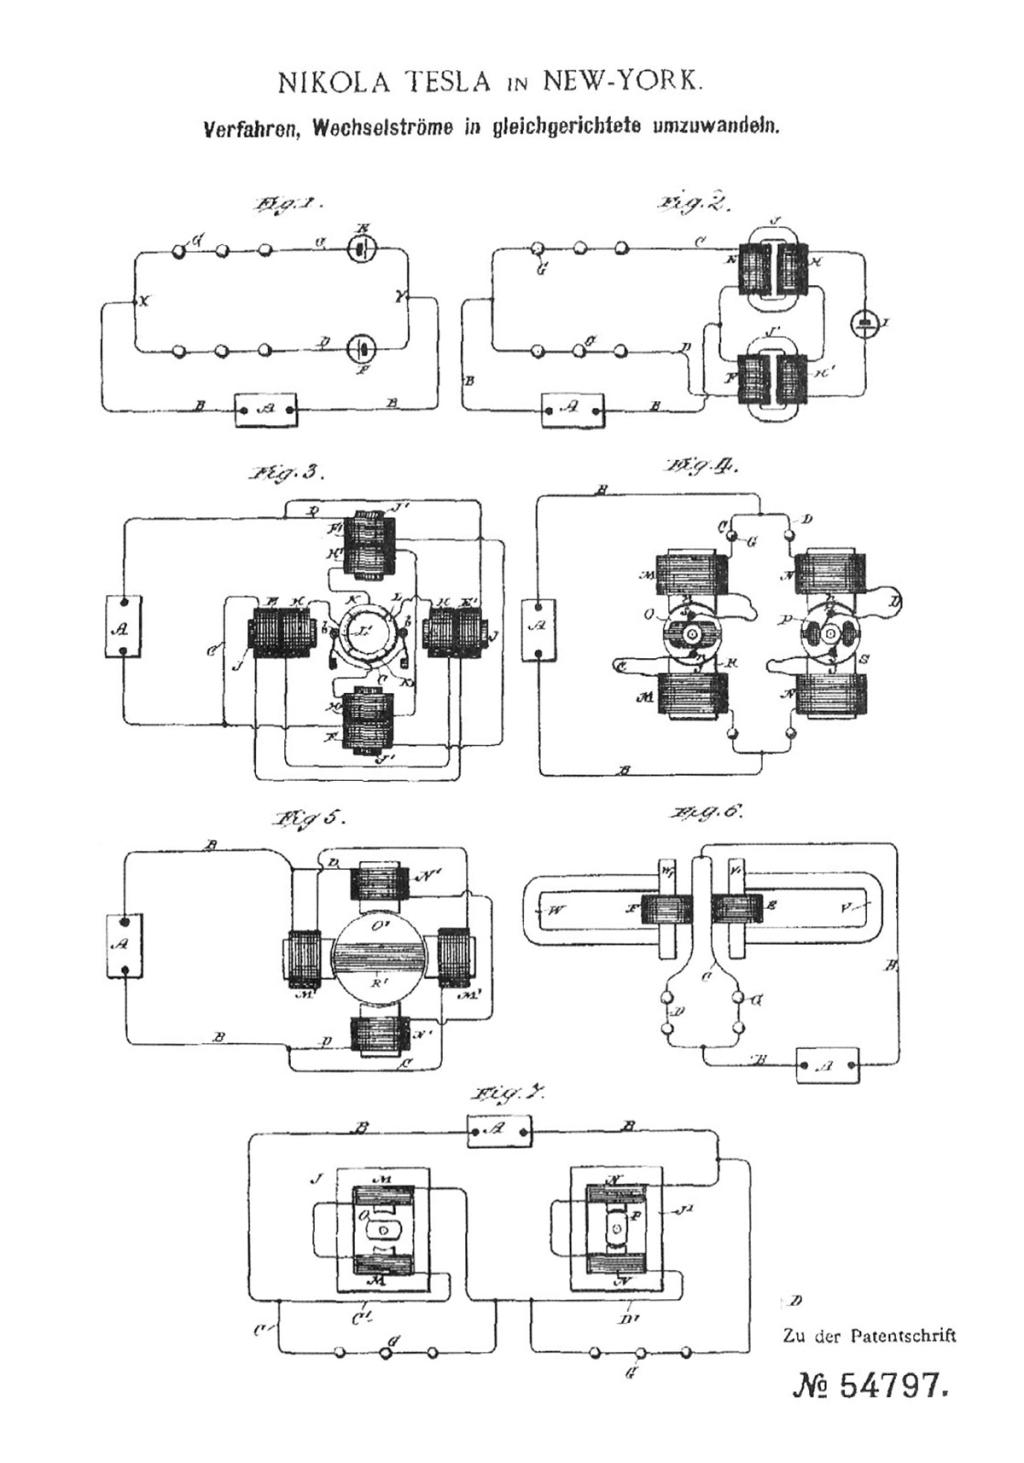 German Patent 54797 - Image 1.